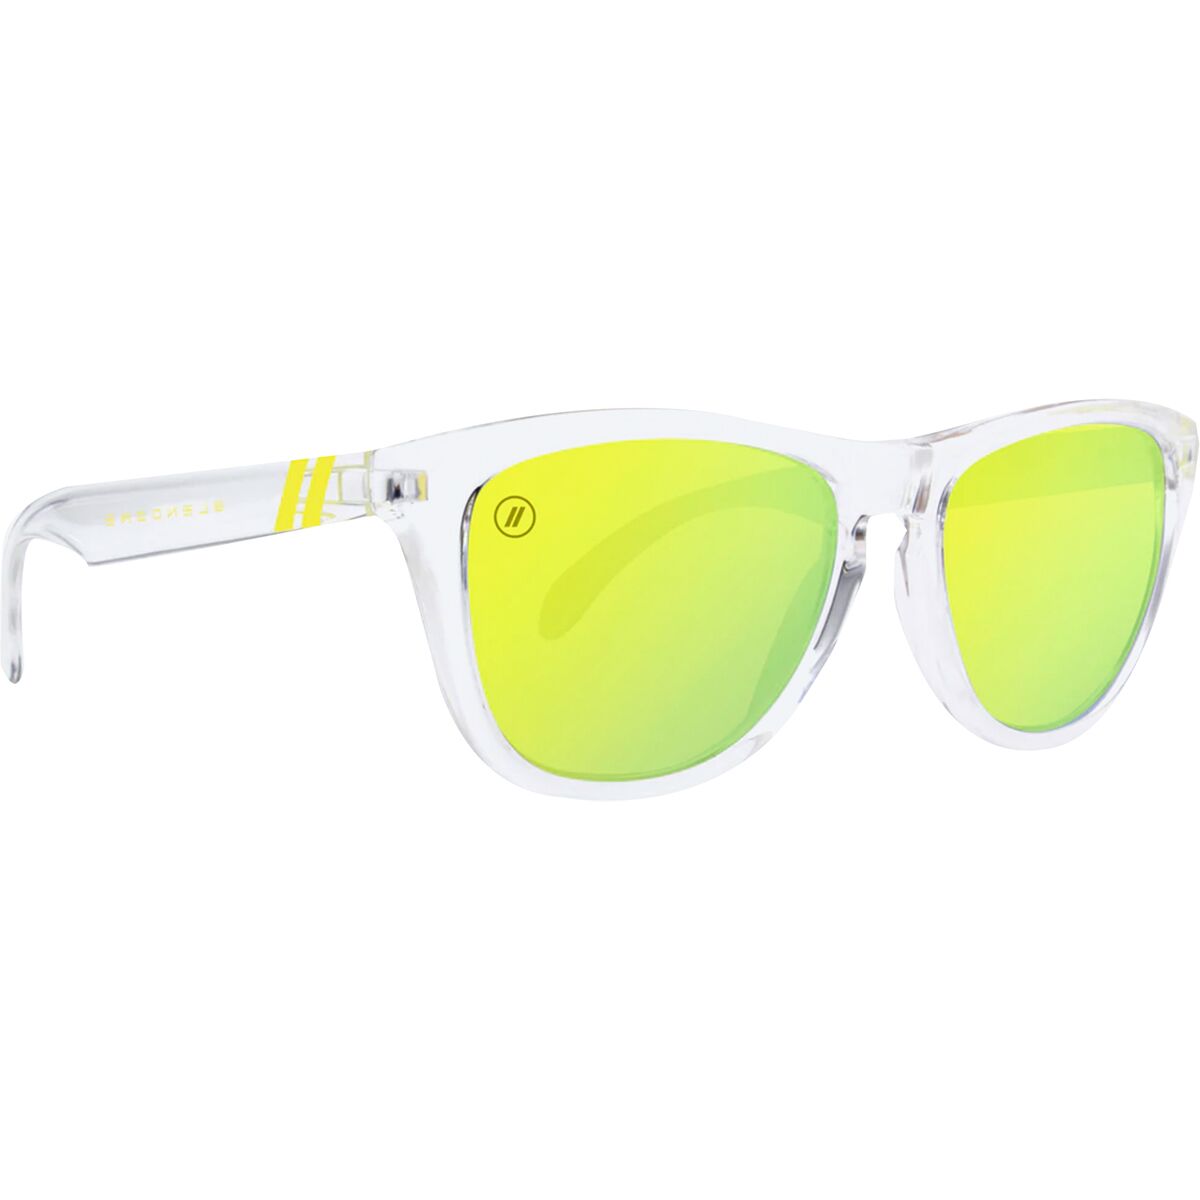 Blenders Eyewear Lemon Blitz L Series Polarized Sunglasses